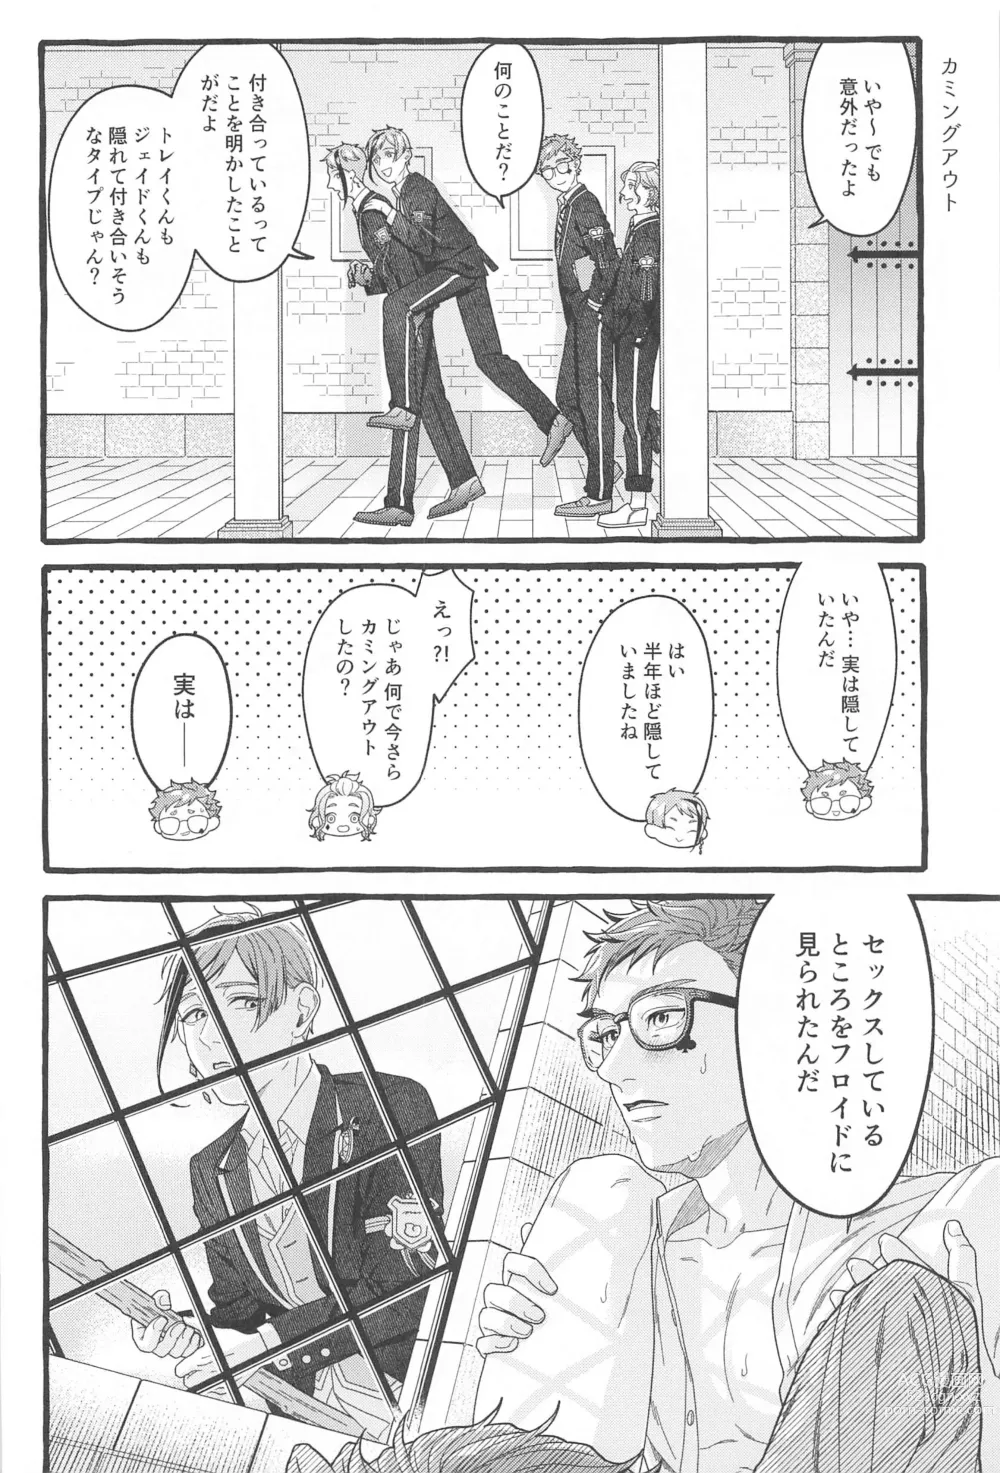 Page 7 of doujinshi Oniaino Futari